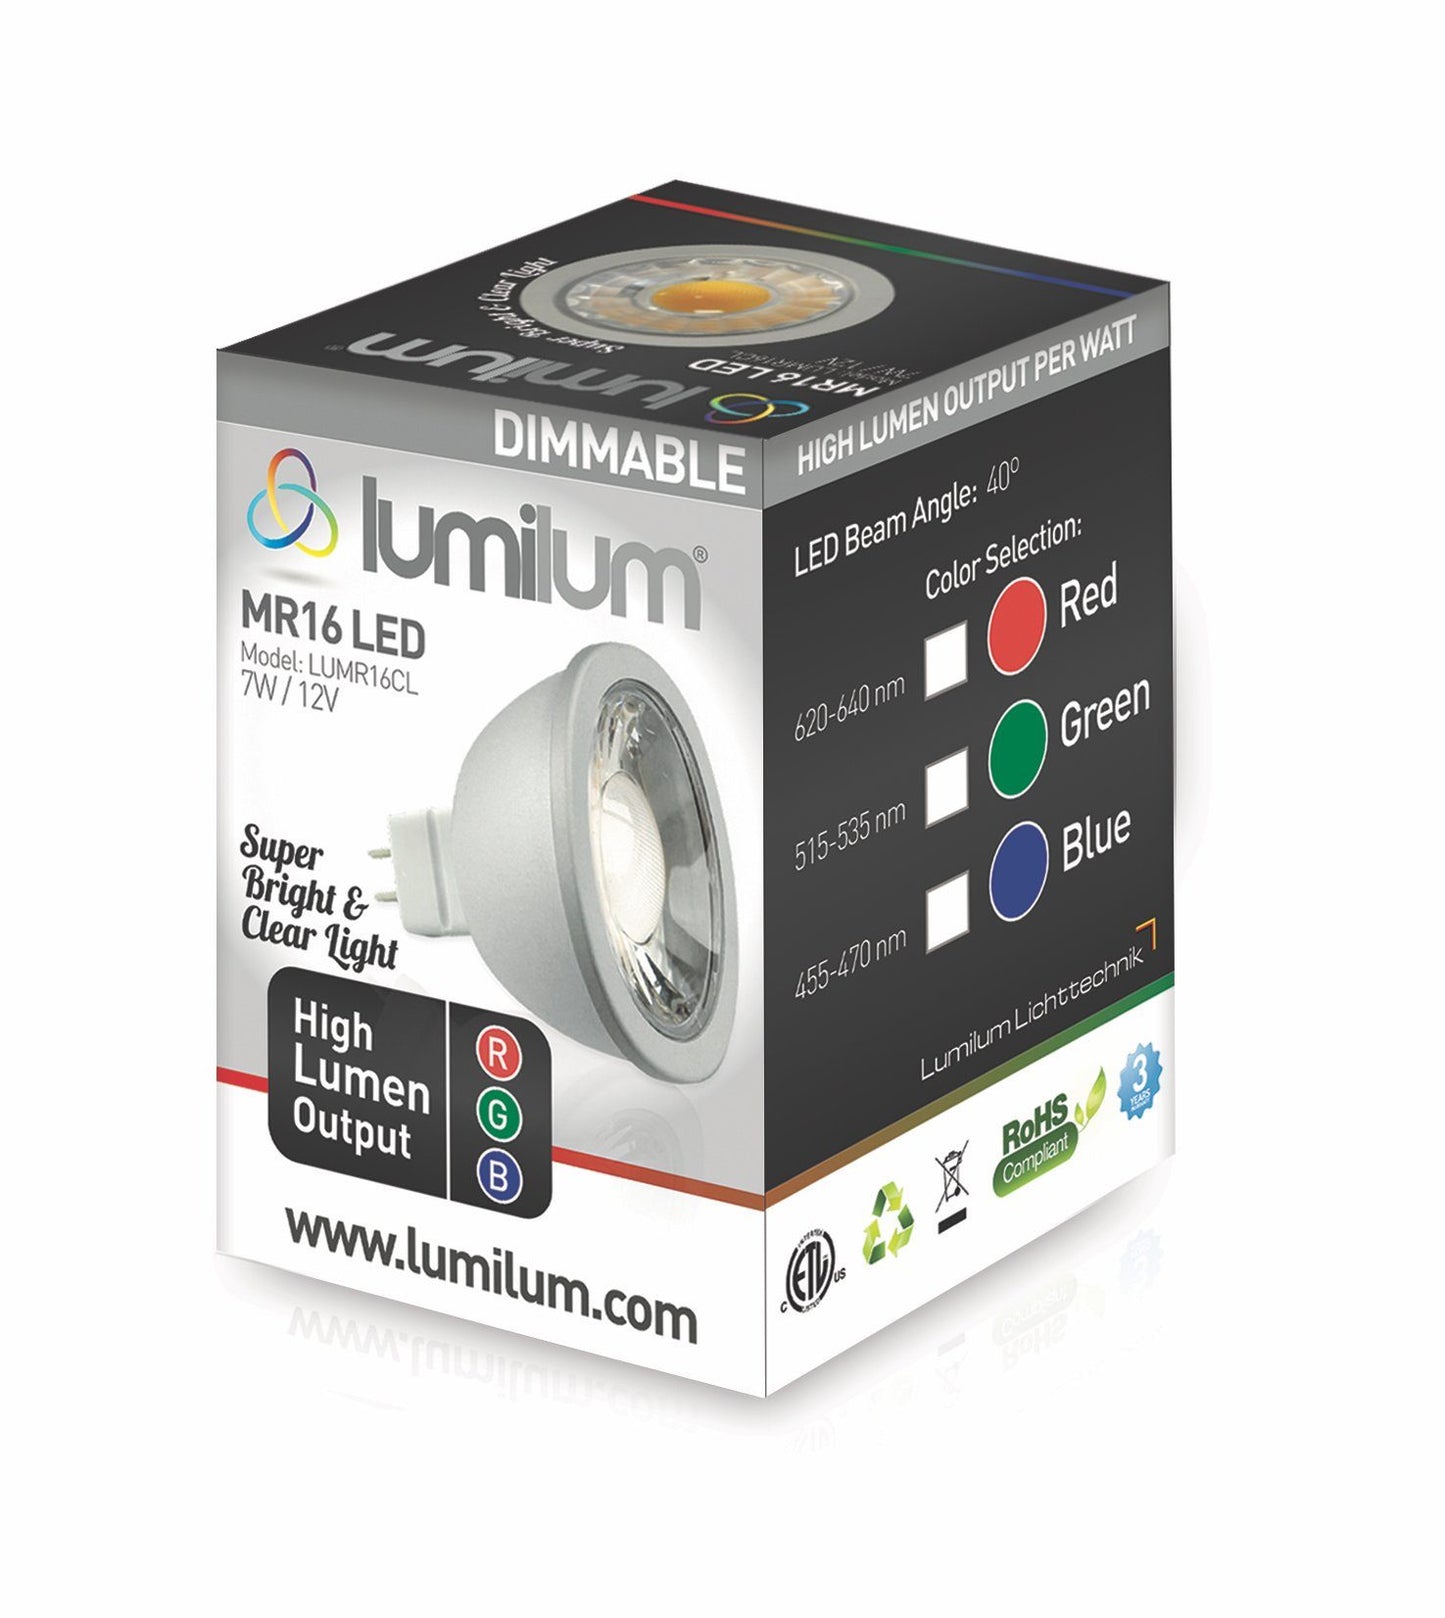 MR16 LED multi color light bulb box from Lumilum